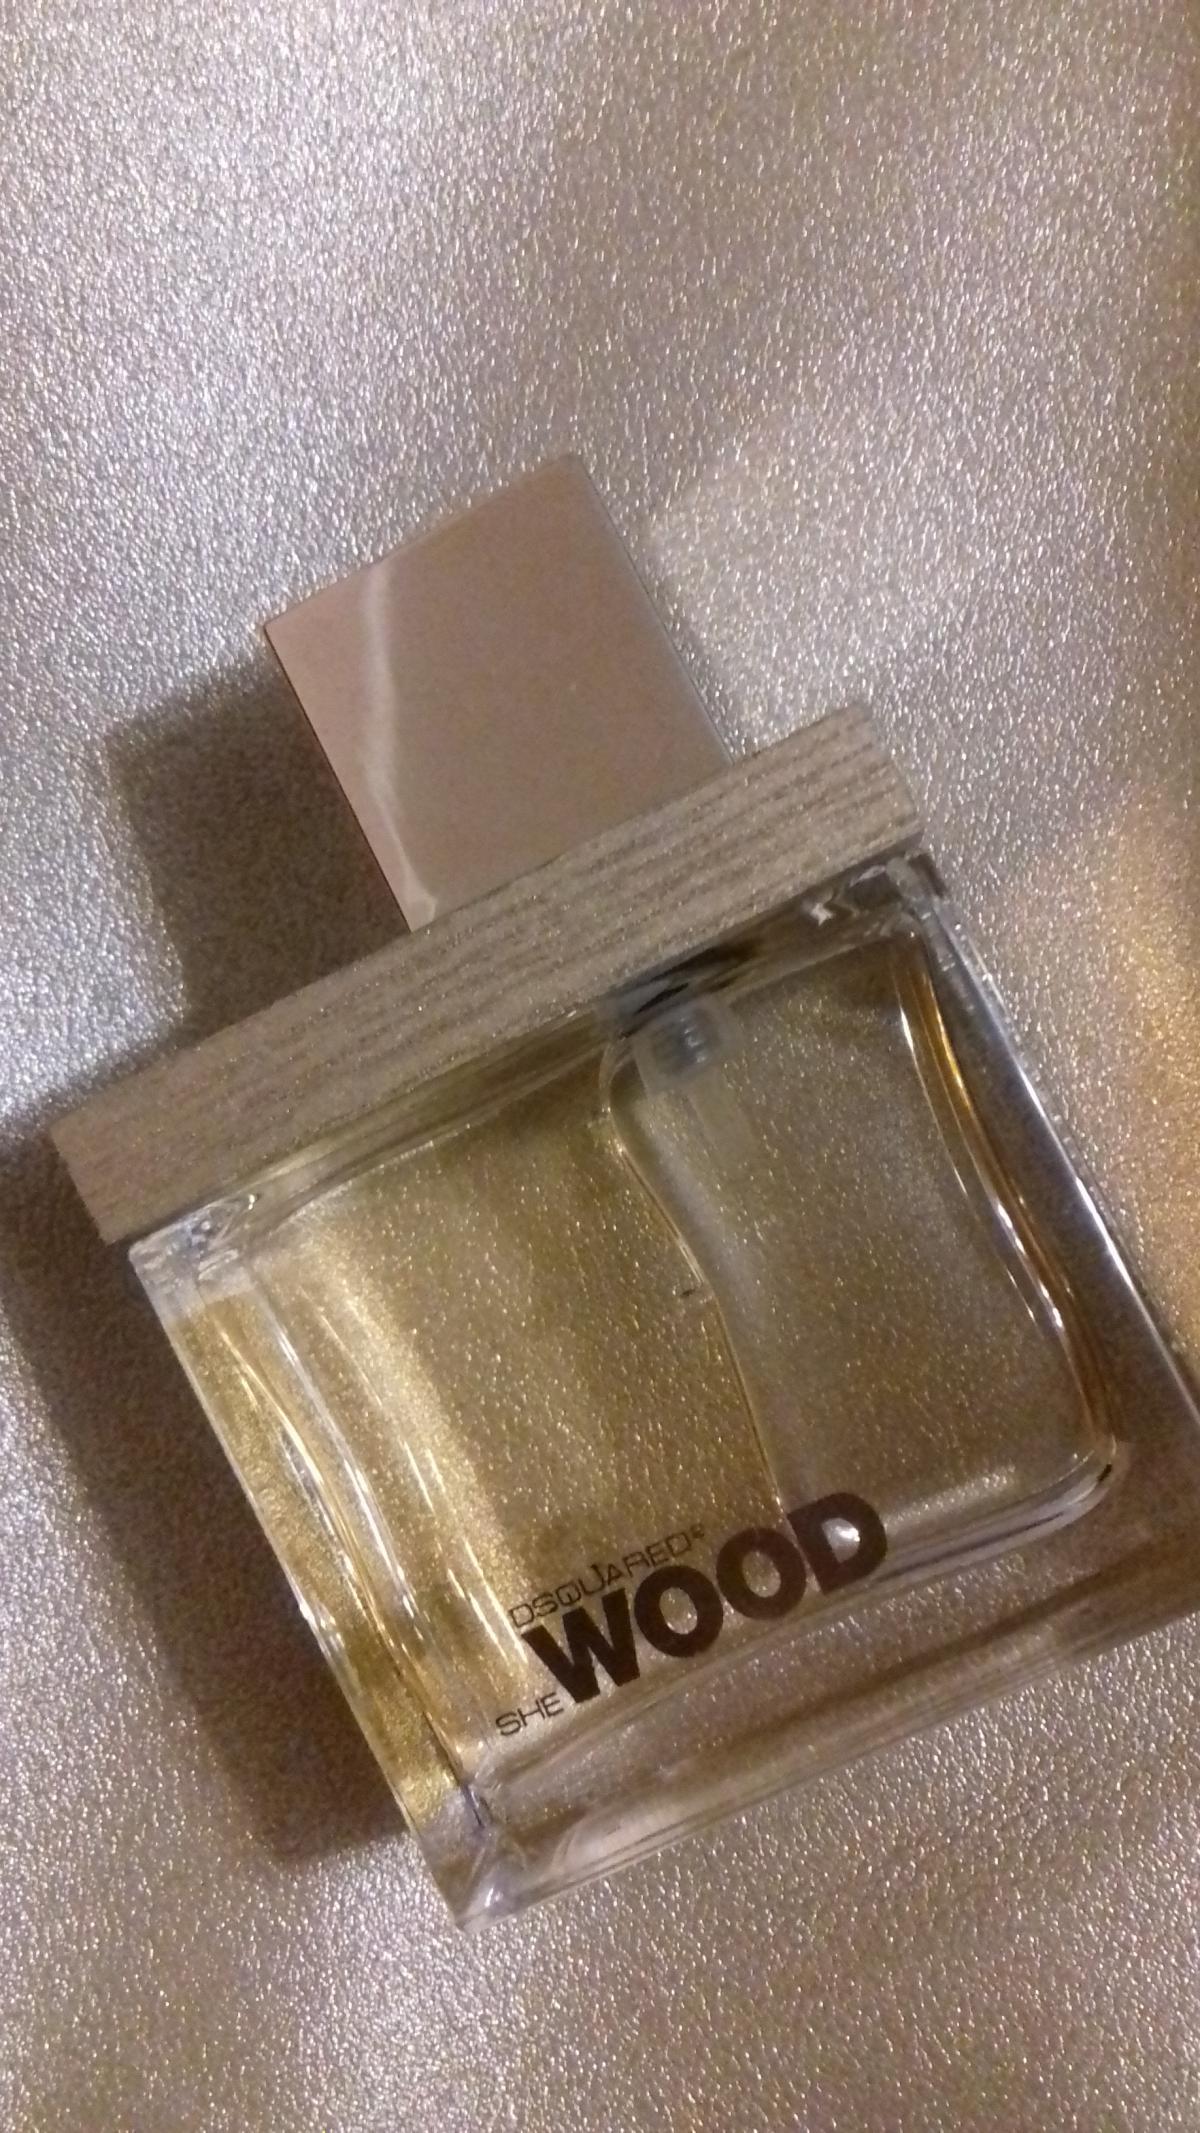 She Wood Golden Light Wood DSQUARED² perfume a fragrance for women 2011